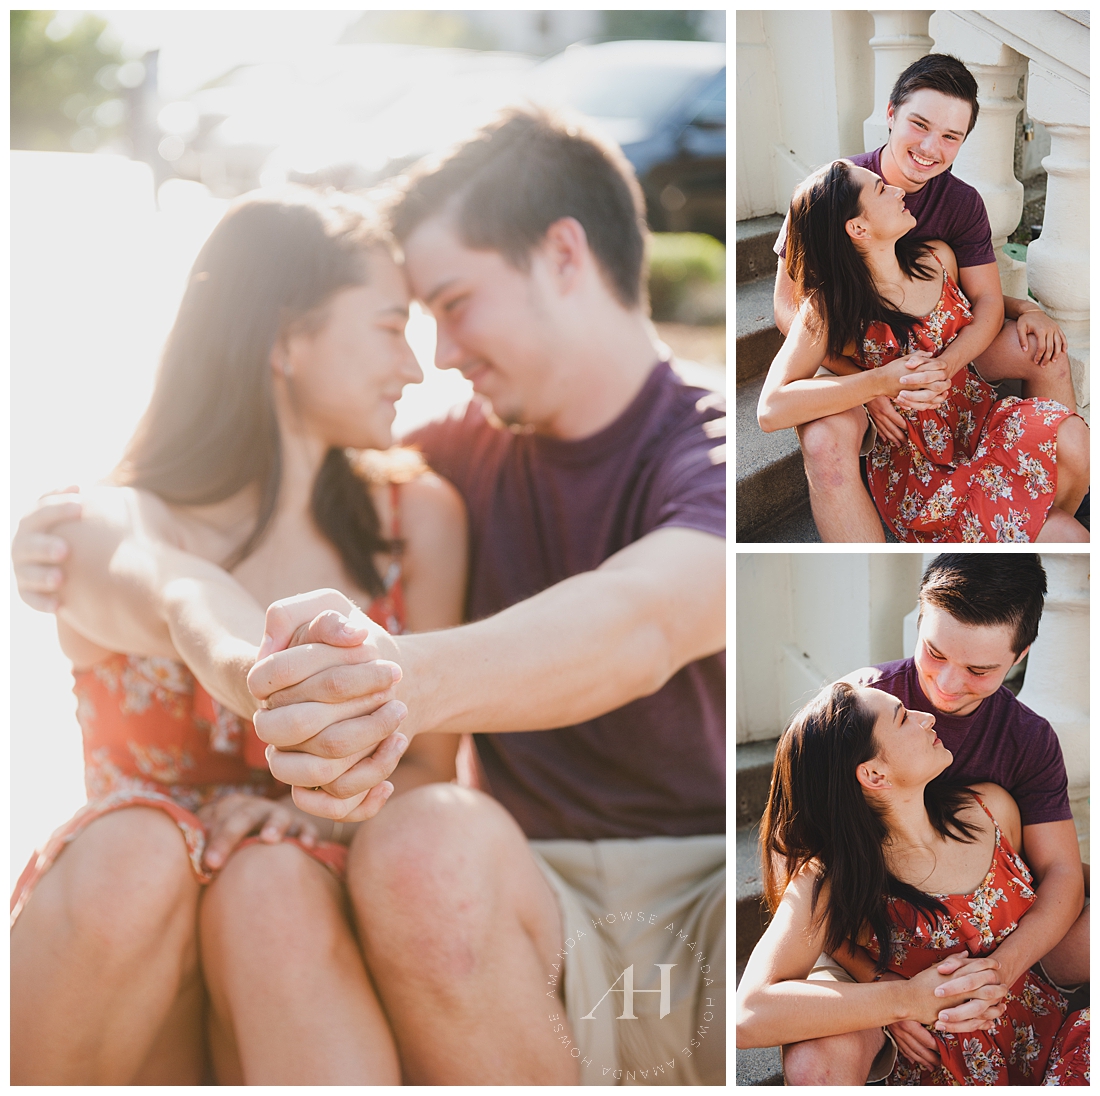 Cute Poses for Couples | High School Senior Photographer Amanda Howse | The Best Tacoma Senior Portrait Photographer